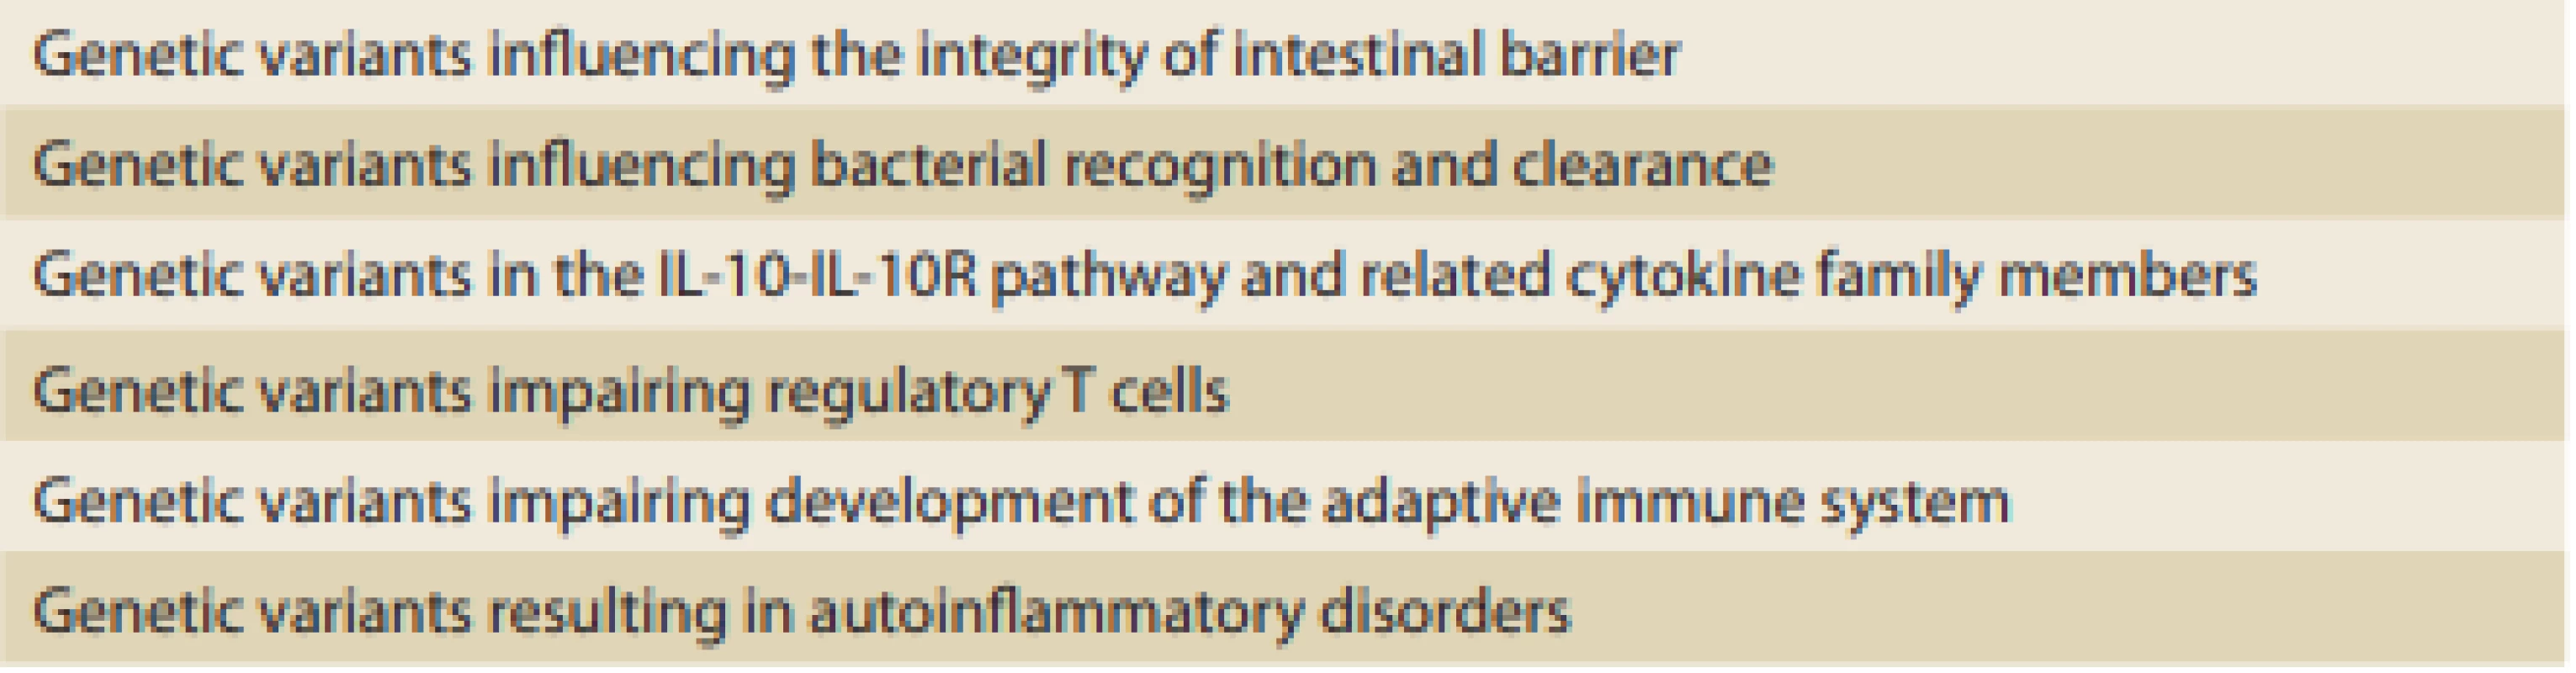 Inborn error of immunity-associated VEO-IBD groups
(adapted according to [13]).<br>
Tab. 1. Vrozené poruchy imunity asociované s VEO-IBD (upraveno podle [13]).